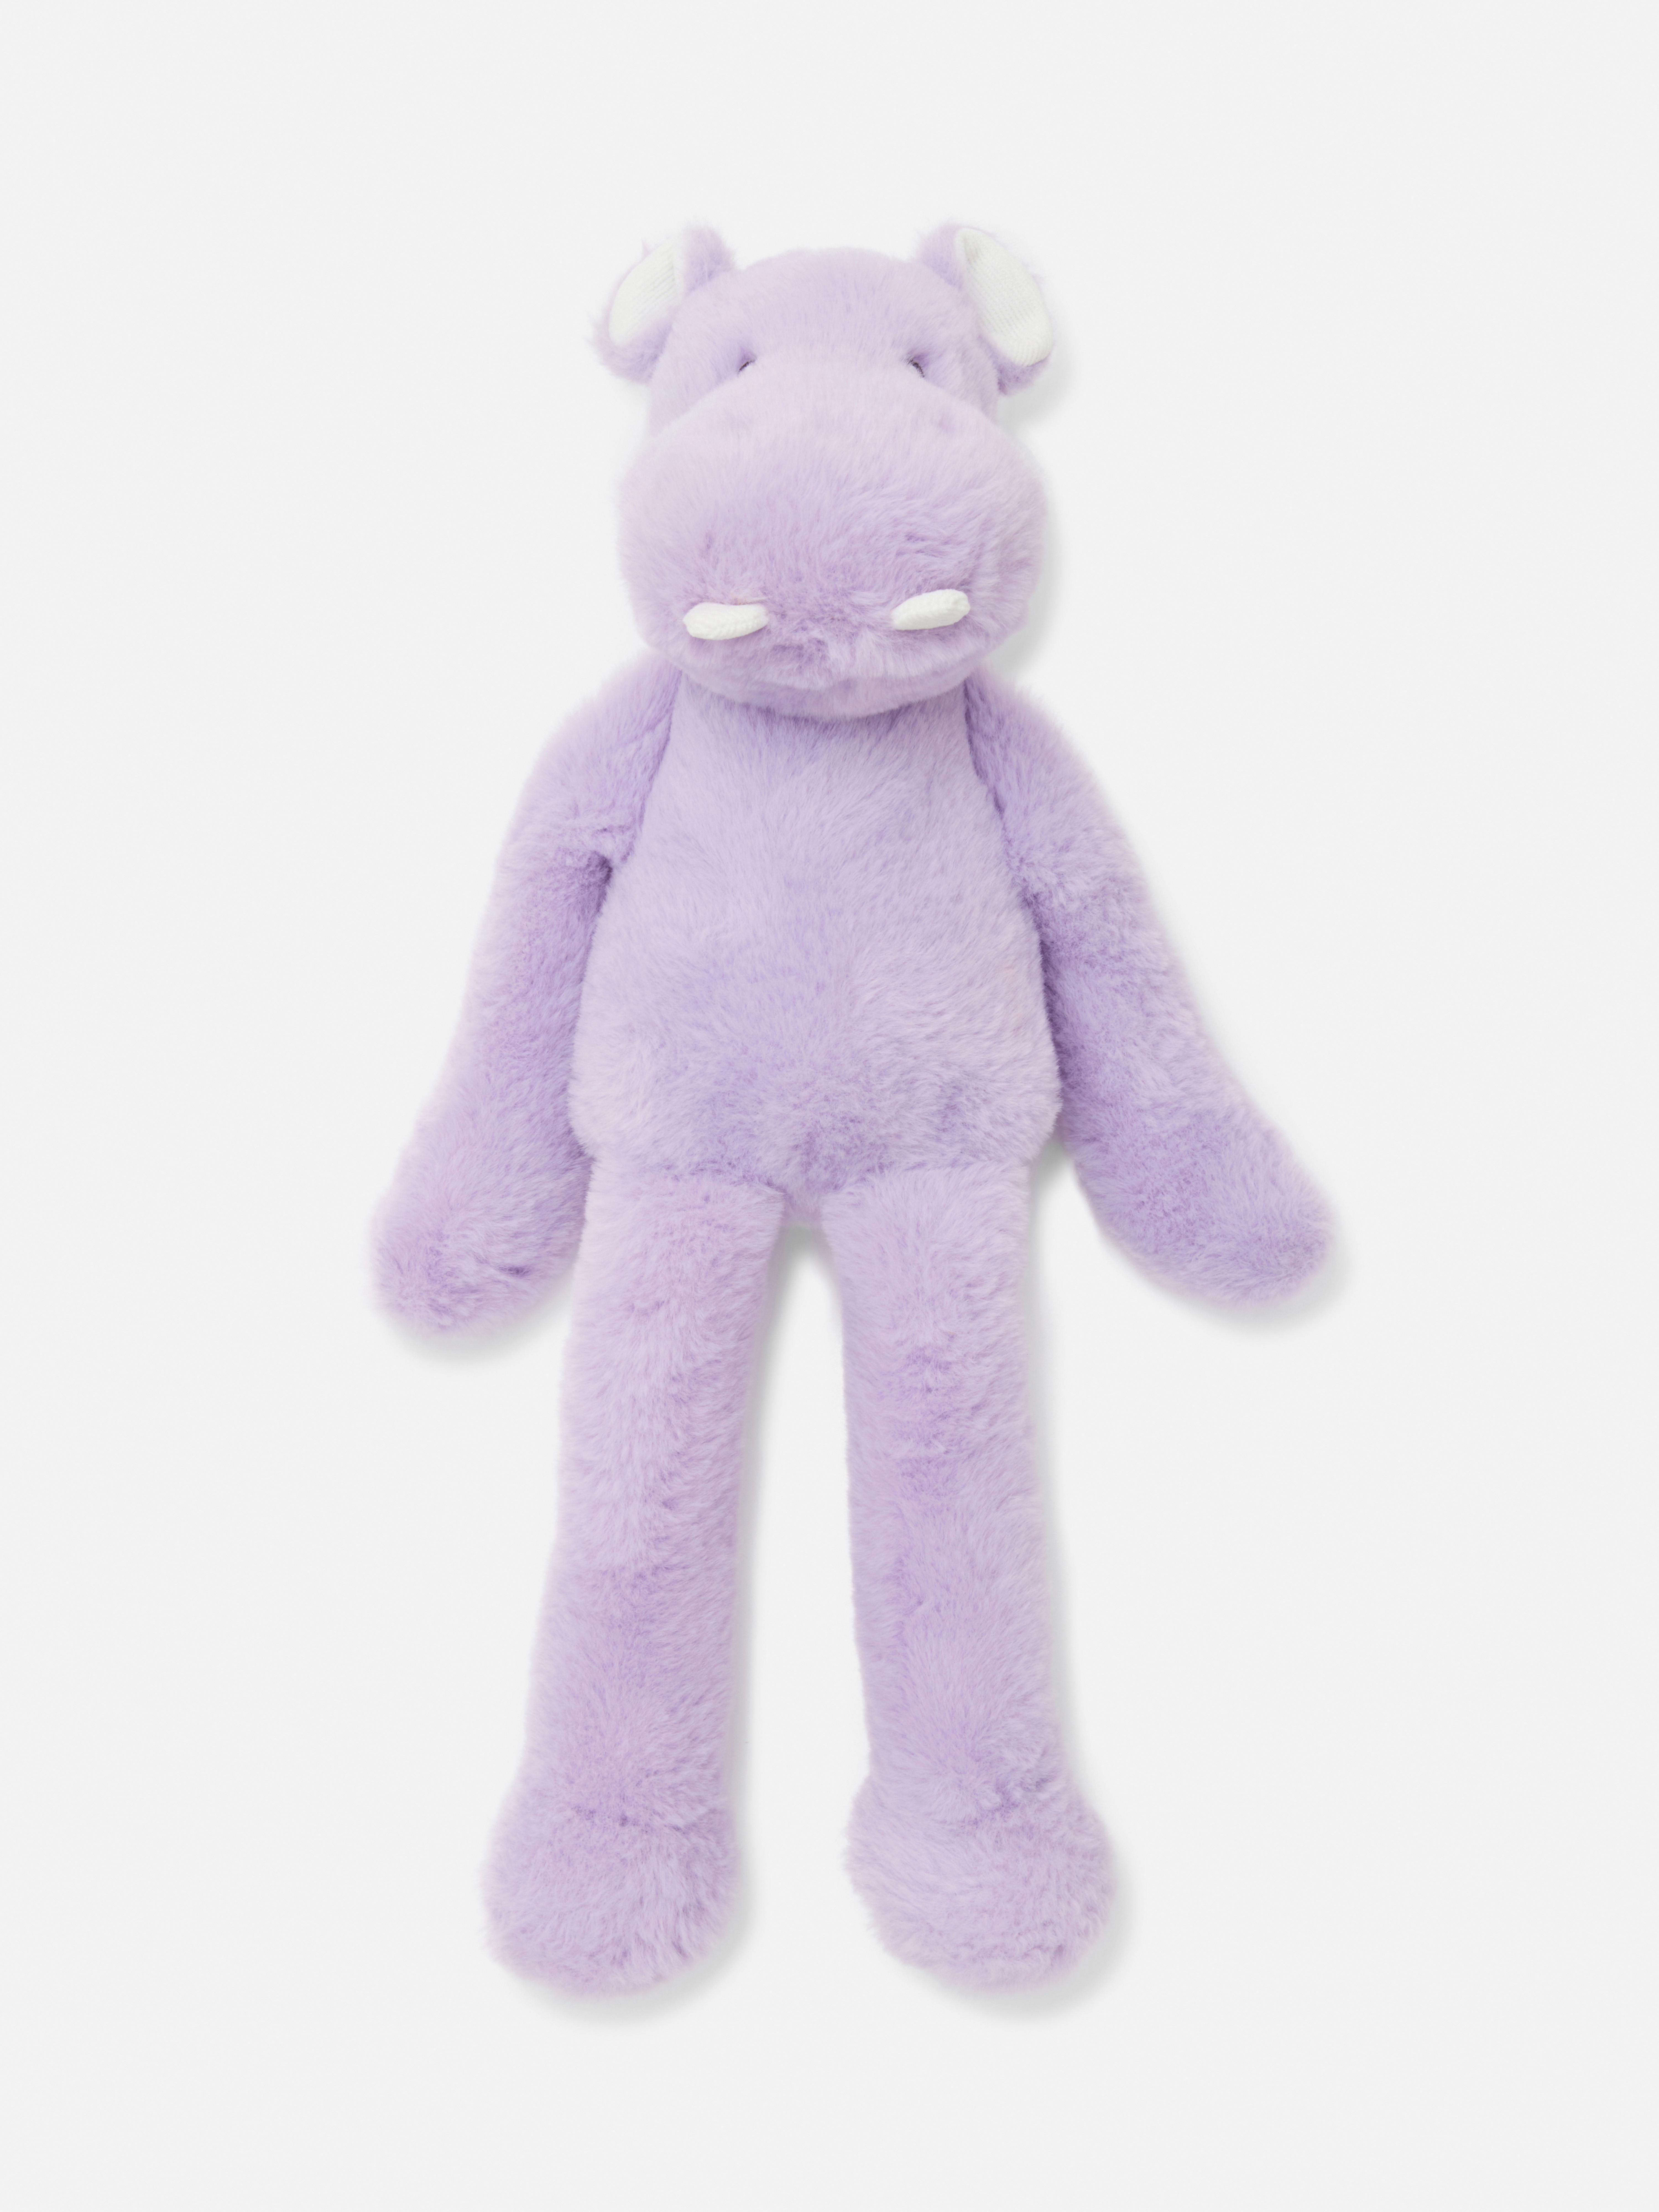 Long-Legged Hippo Plush Toy